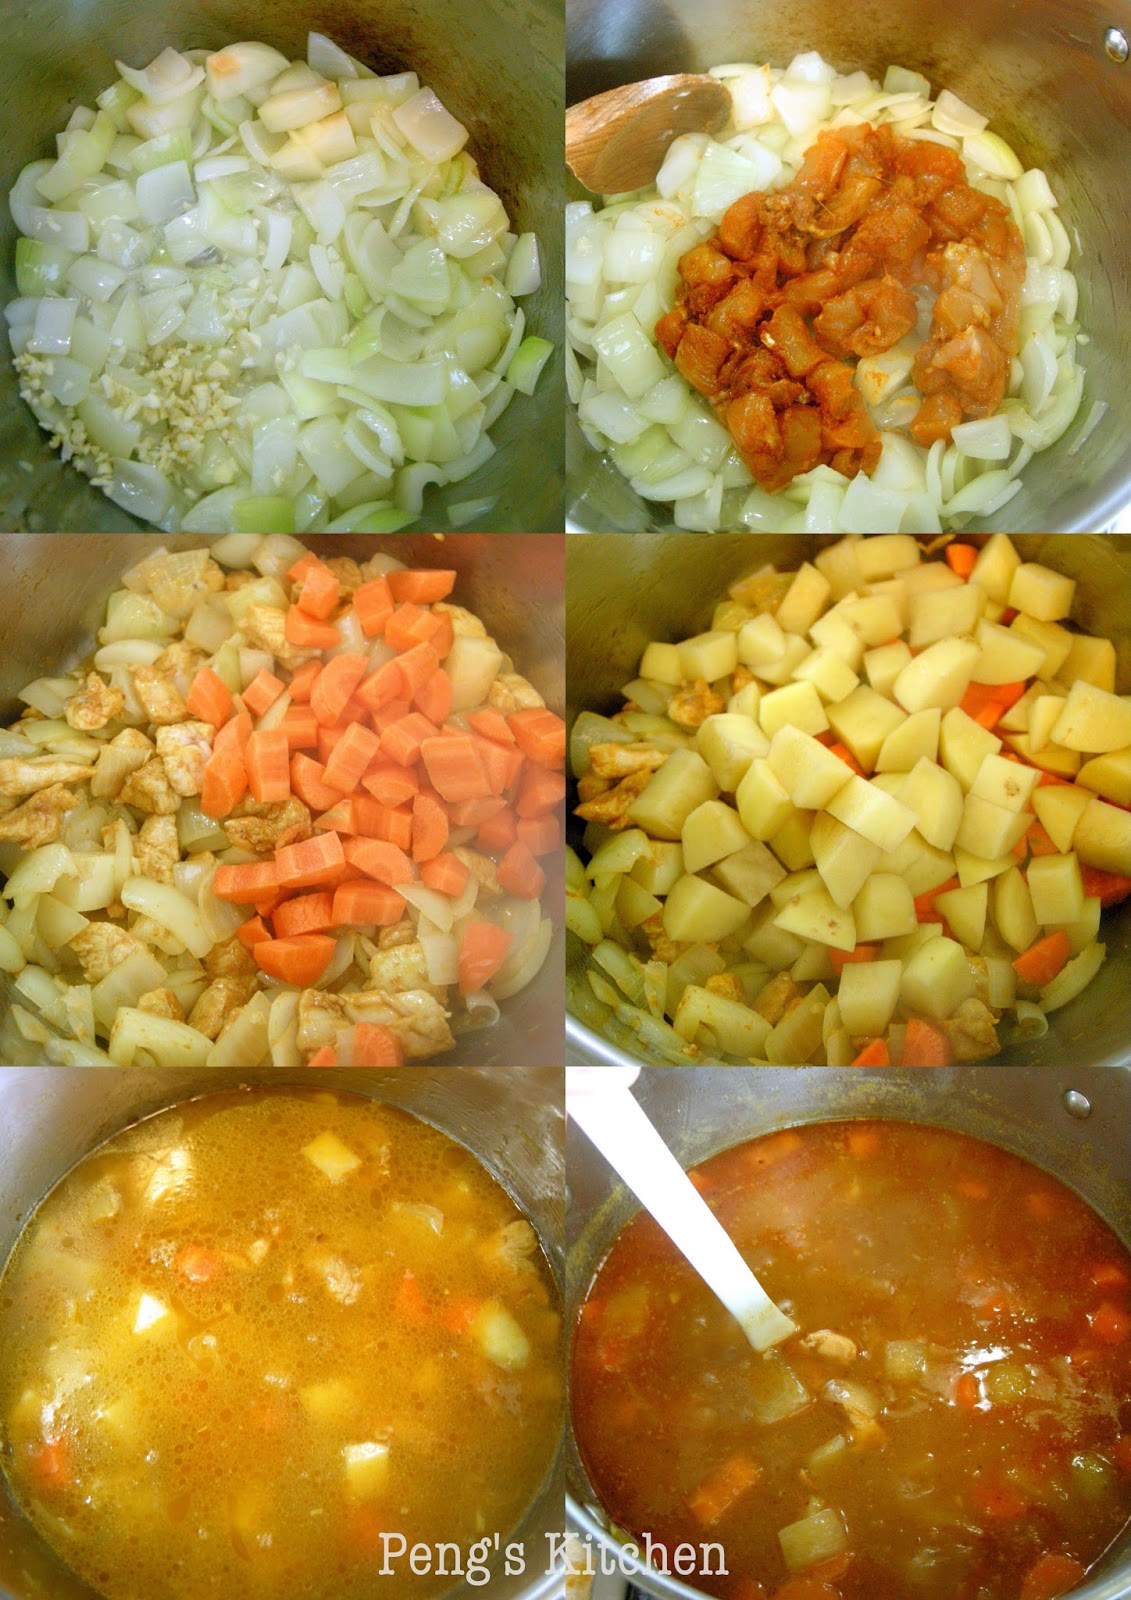 Peng's Kitchen: Homemade Japanese Curry Part II